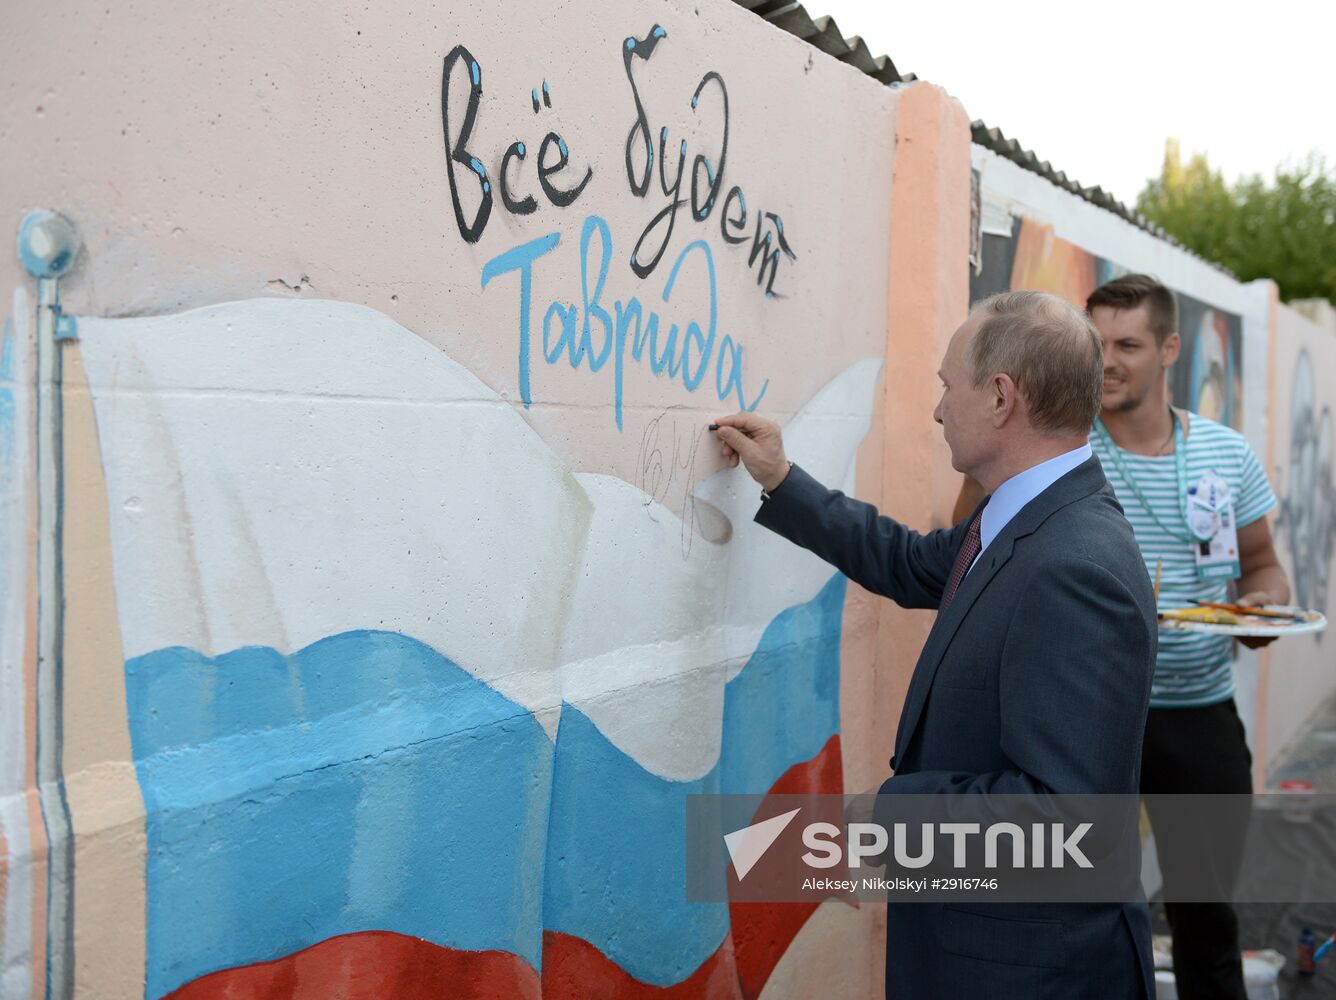 President Vladimir Putin attends youth educational forum "Tavrida"